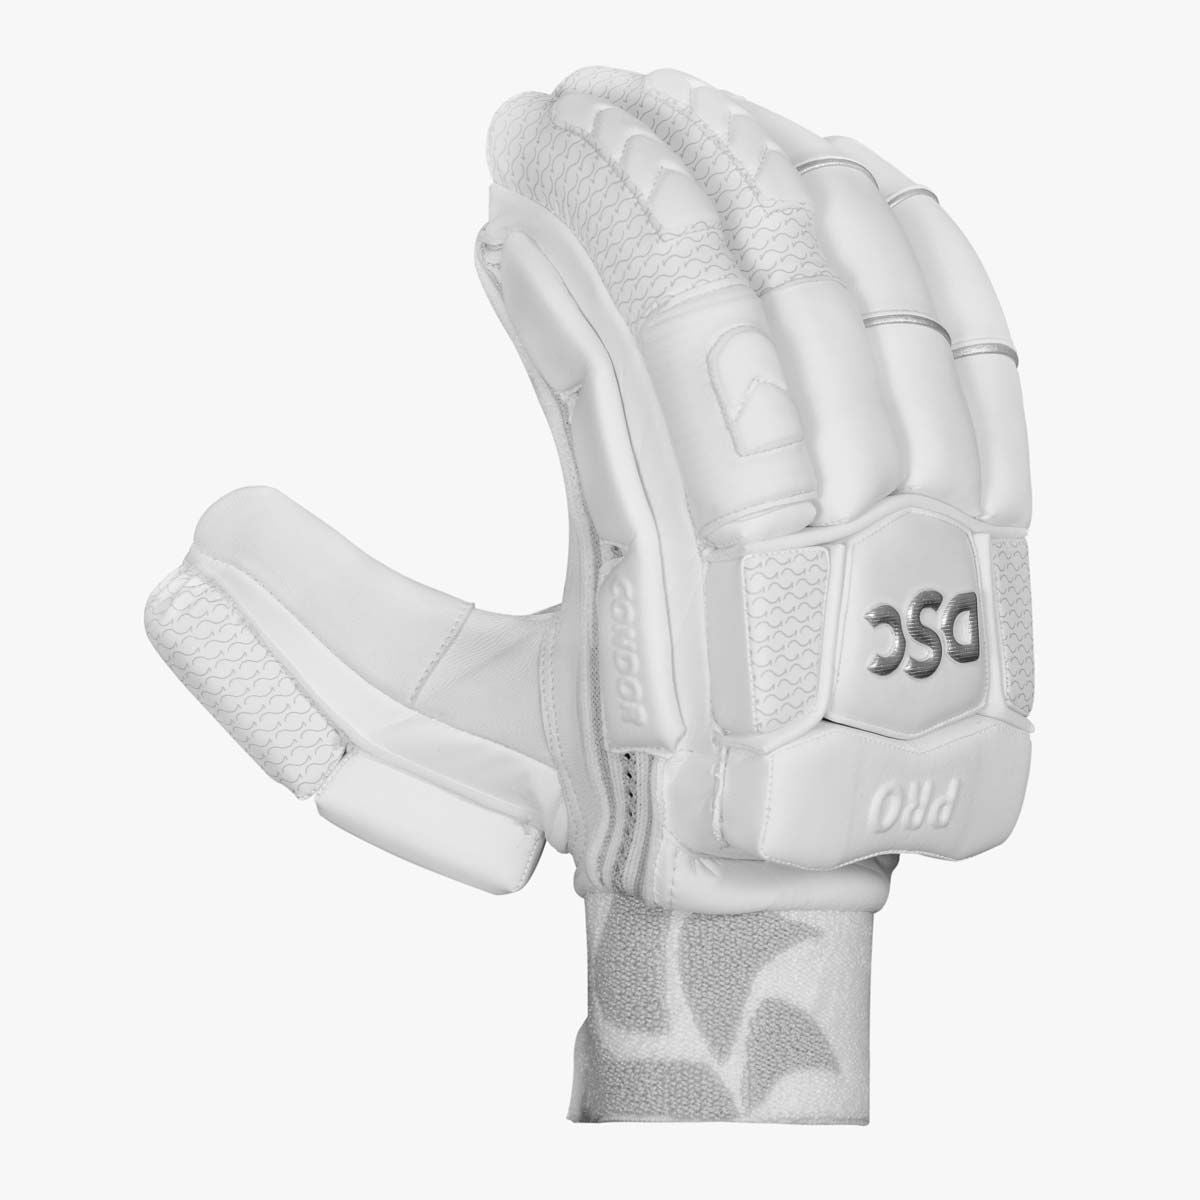 DSC Condor PRO Batting Gloves - ecricstore